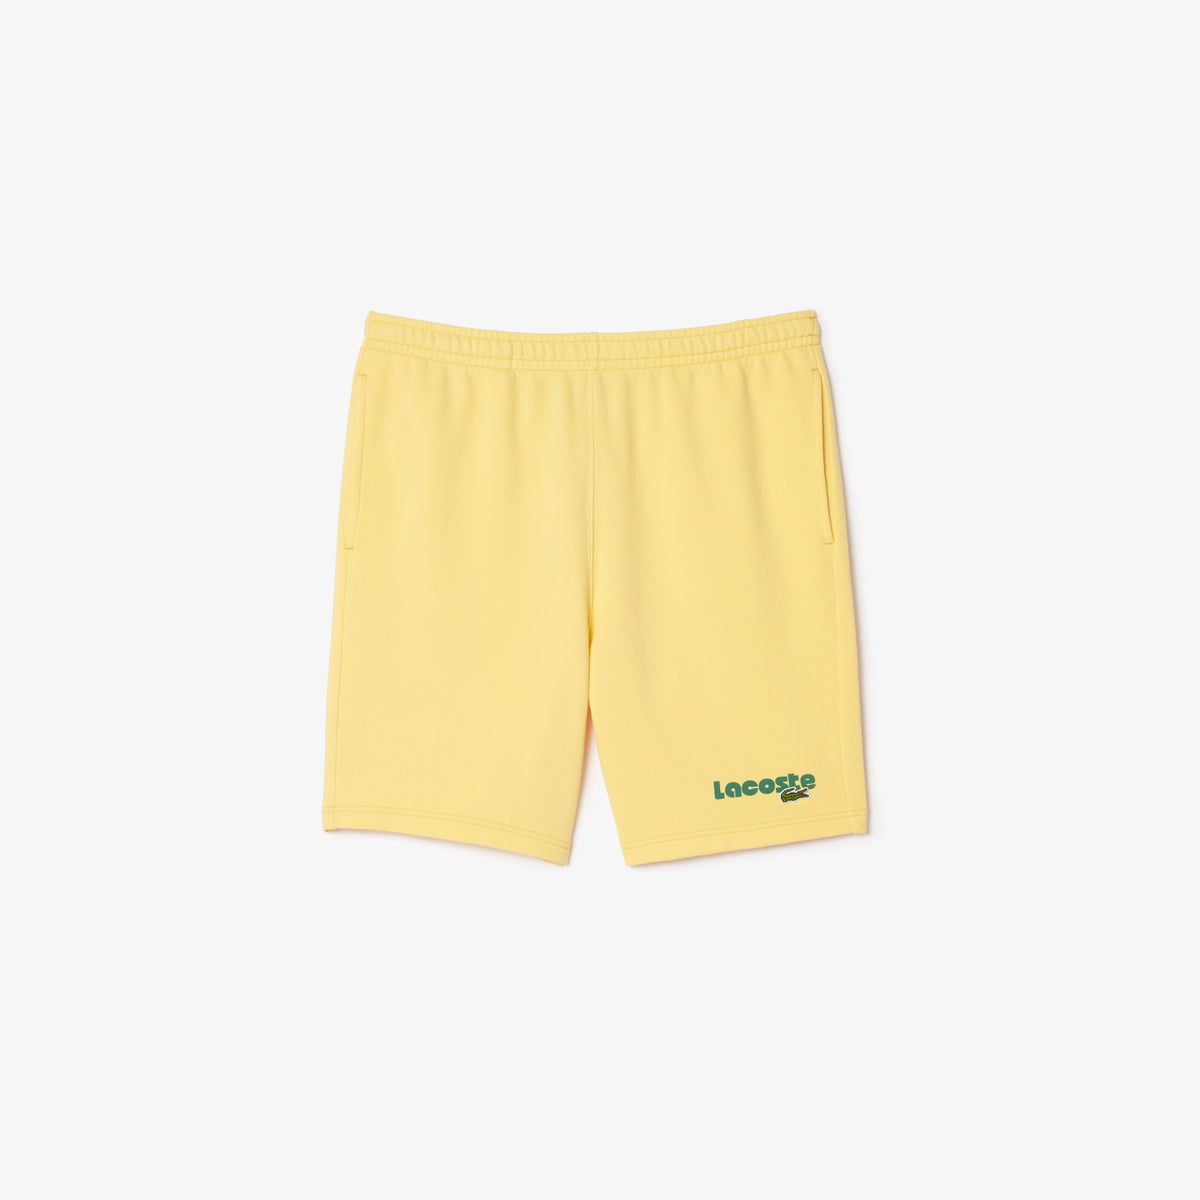 Washed Effect Printed Shorts - Cornsilk Yellow